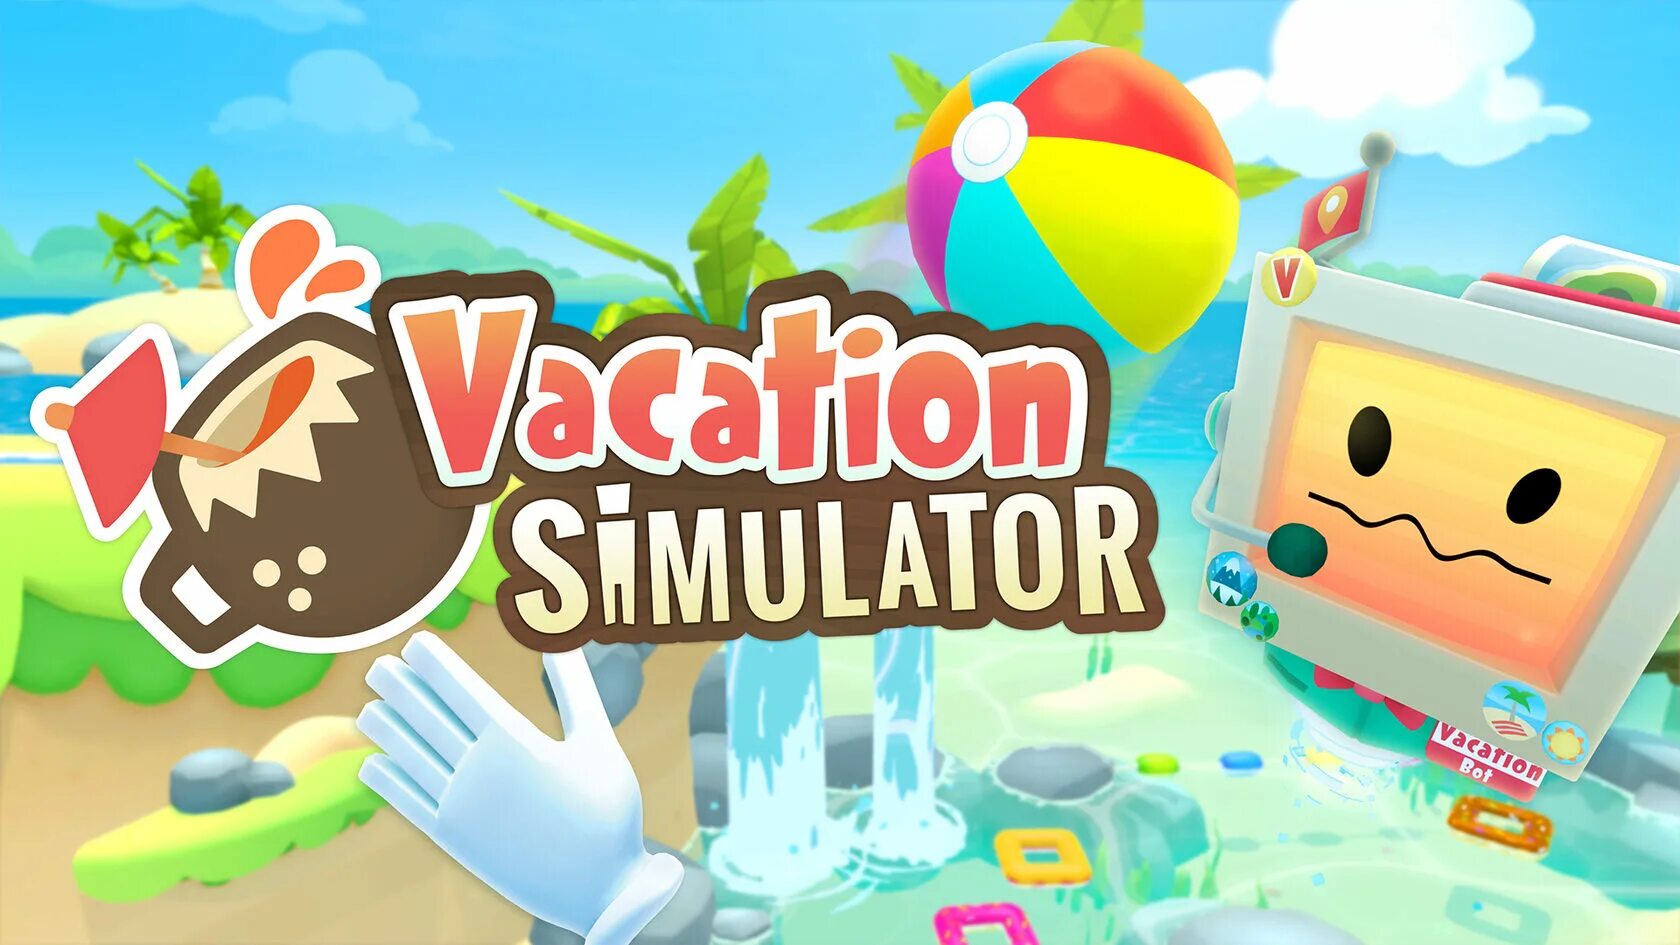 Vacation vr. Vacation симулятор. Симулятор отдыха ВР. Vacation Simulator Oculus. Job Simulator отпуск.